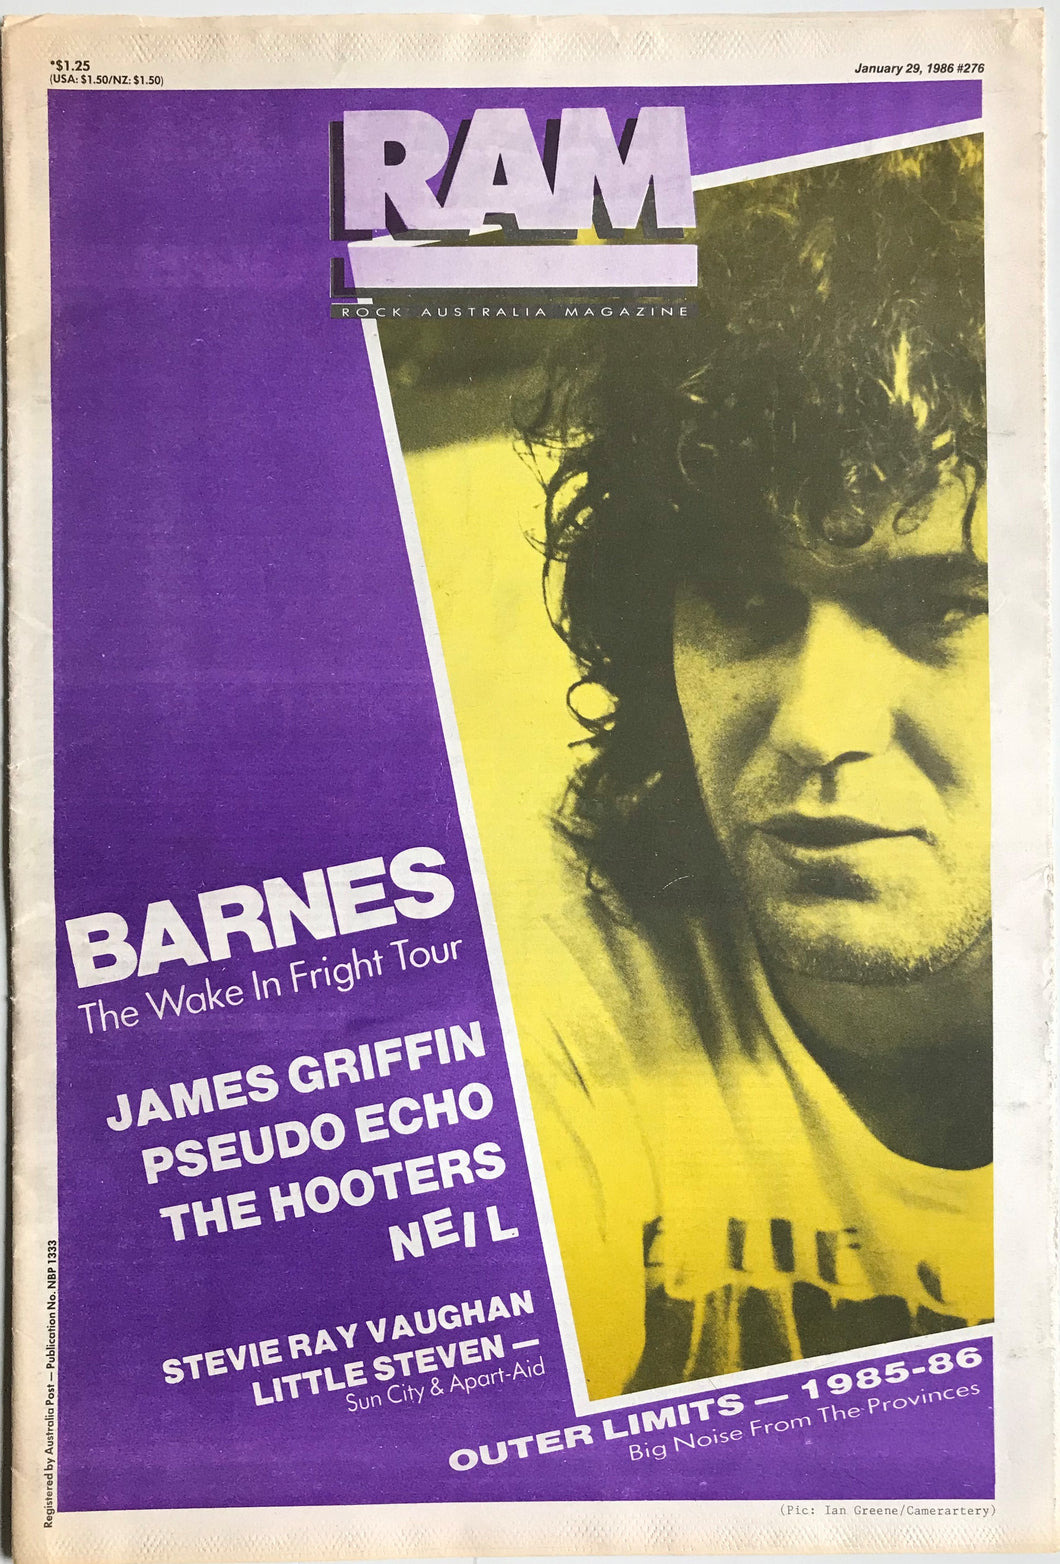 Jimmy Barnes  - RAM January 29, 1986 #276